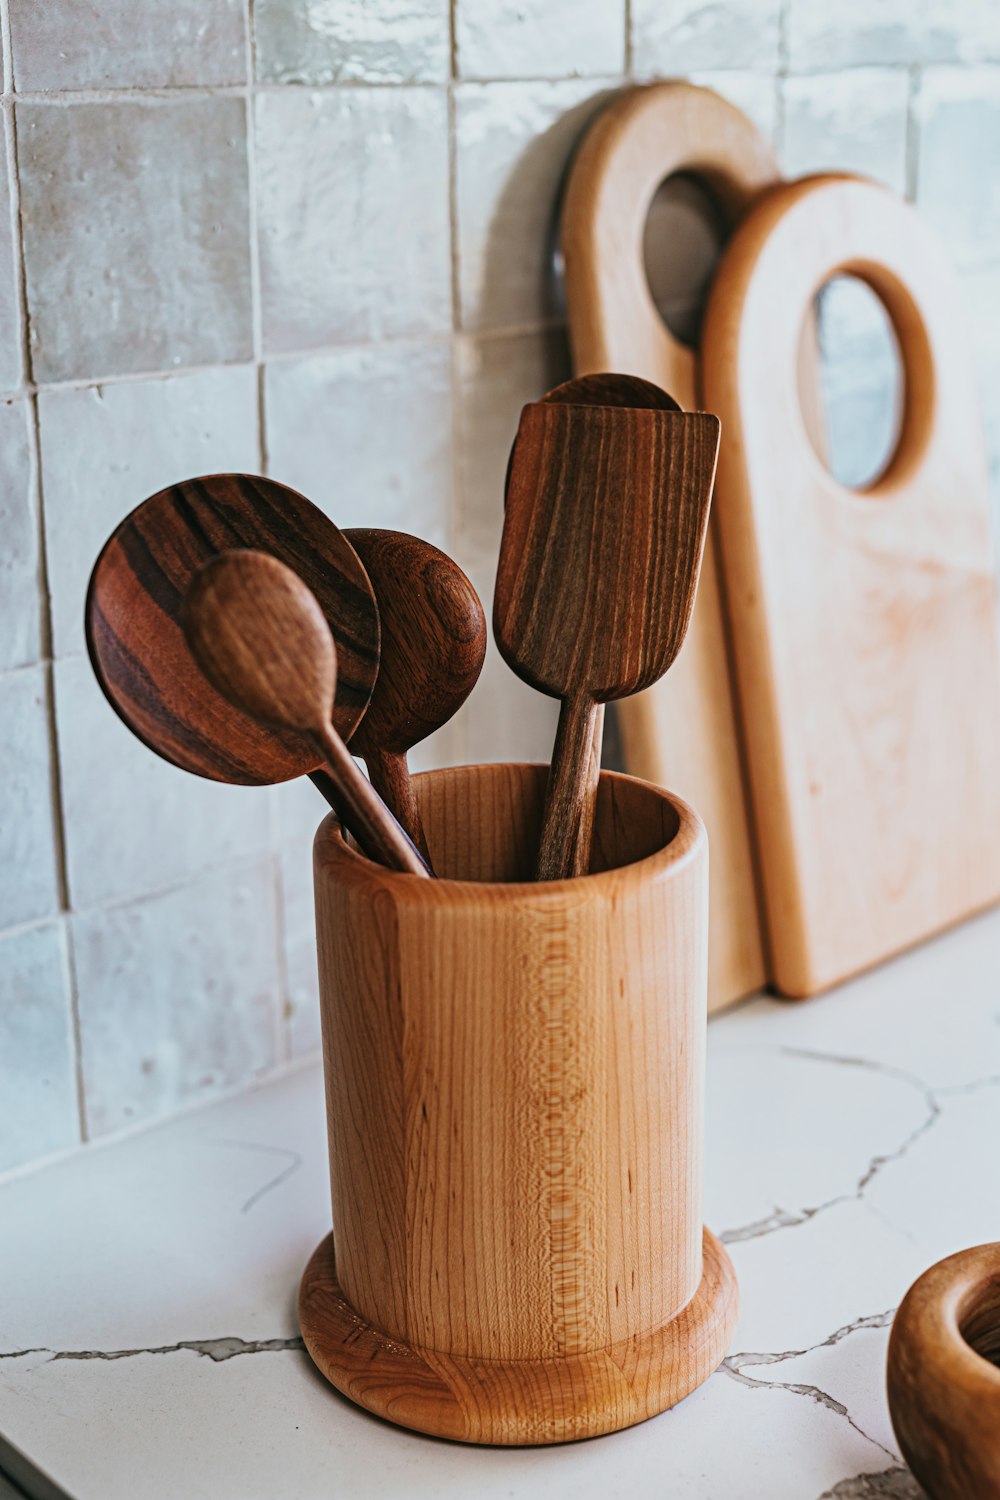 brown wooden spoons in brown wooden cup